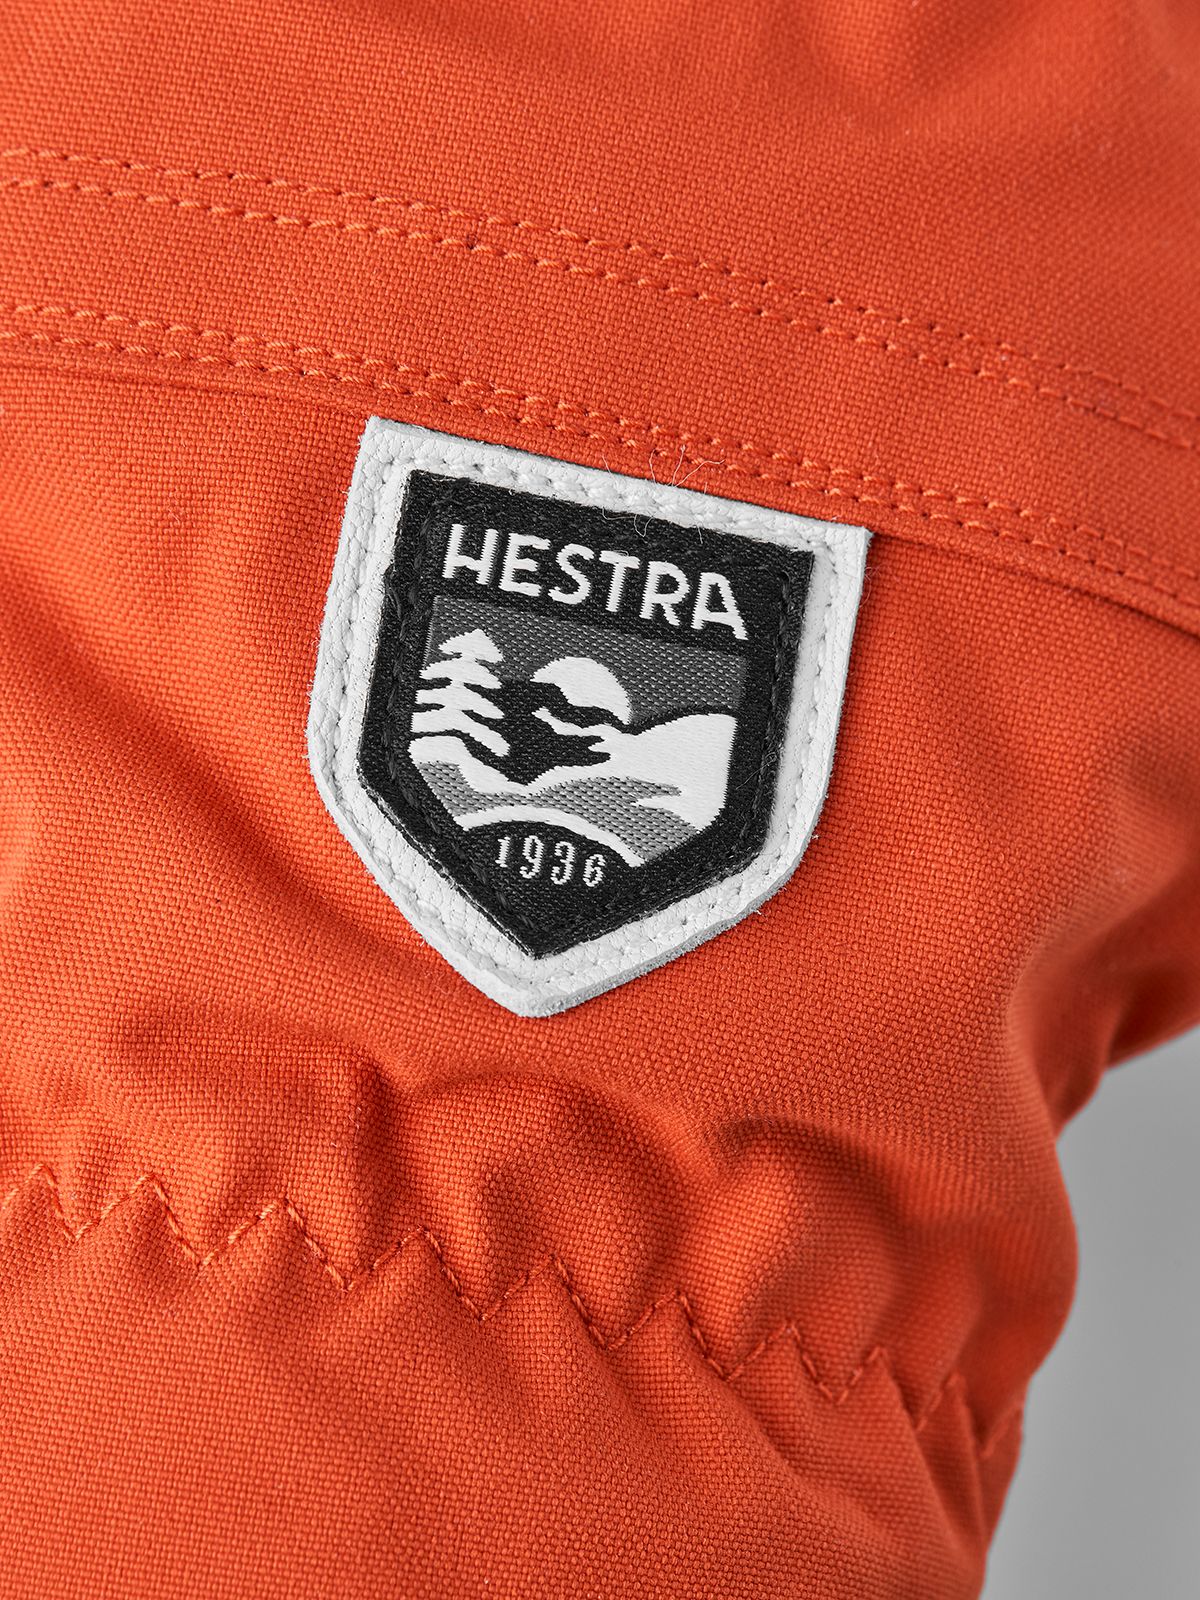 Hestra Army Leather Heli Ski Brick Red